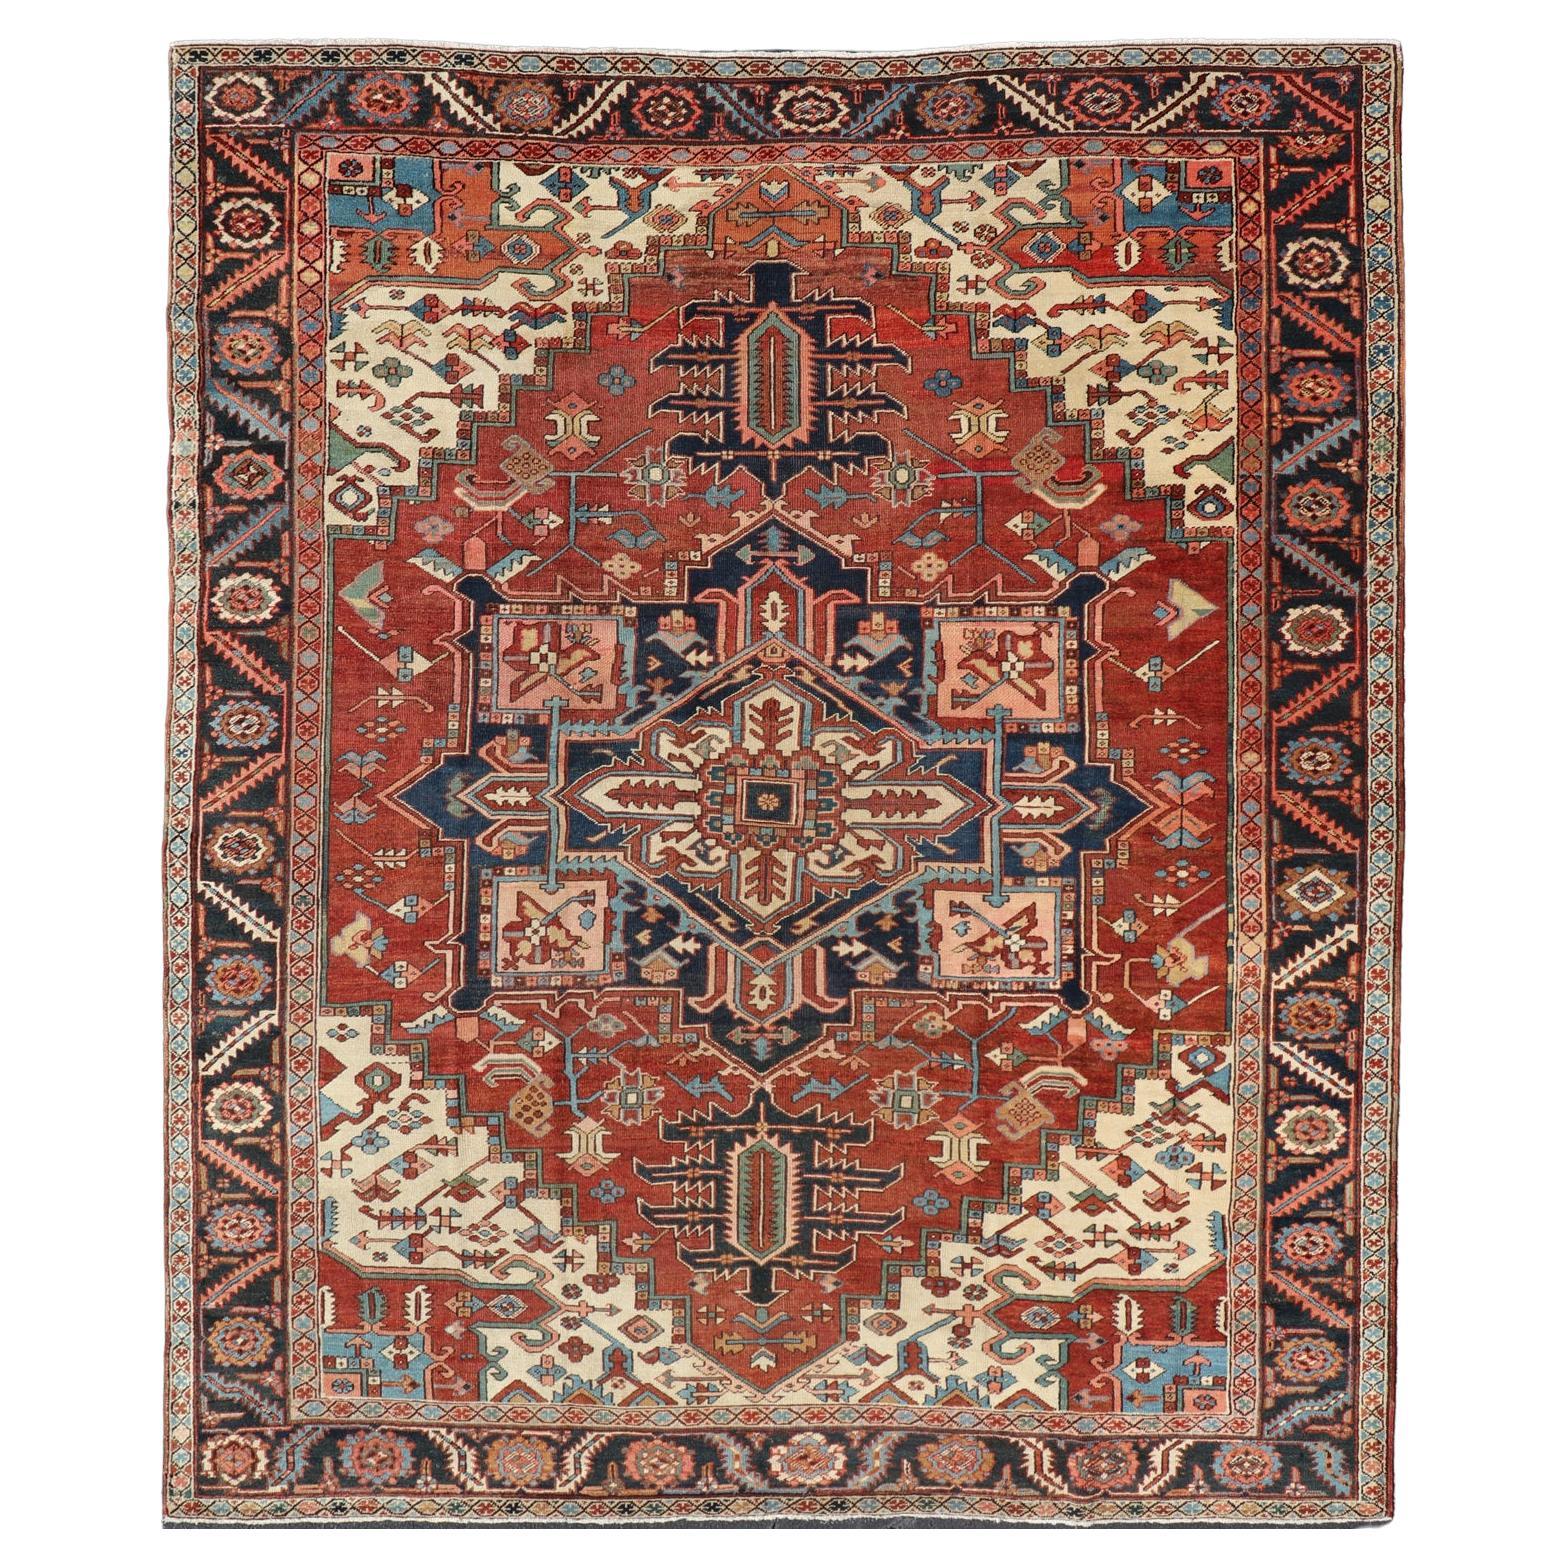 Early 20th Century Antique Persian Serapi Carpet with Stylized Geometric Motifs